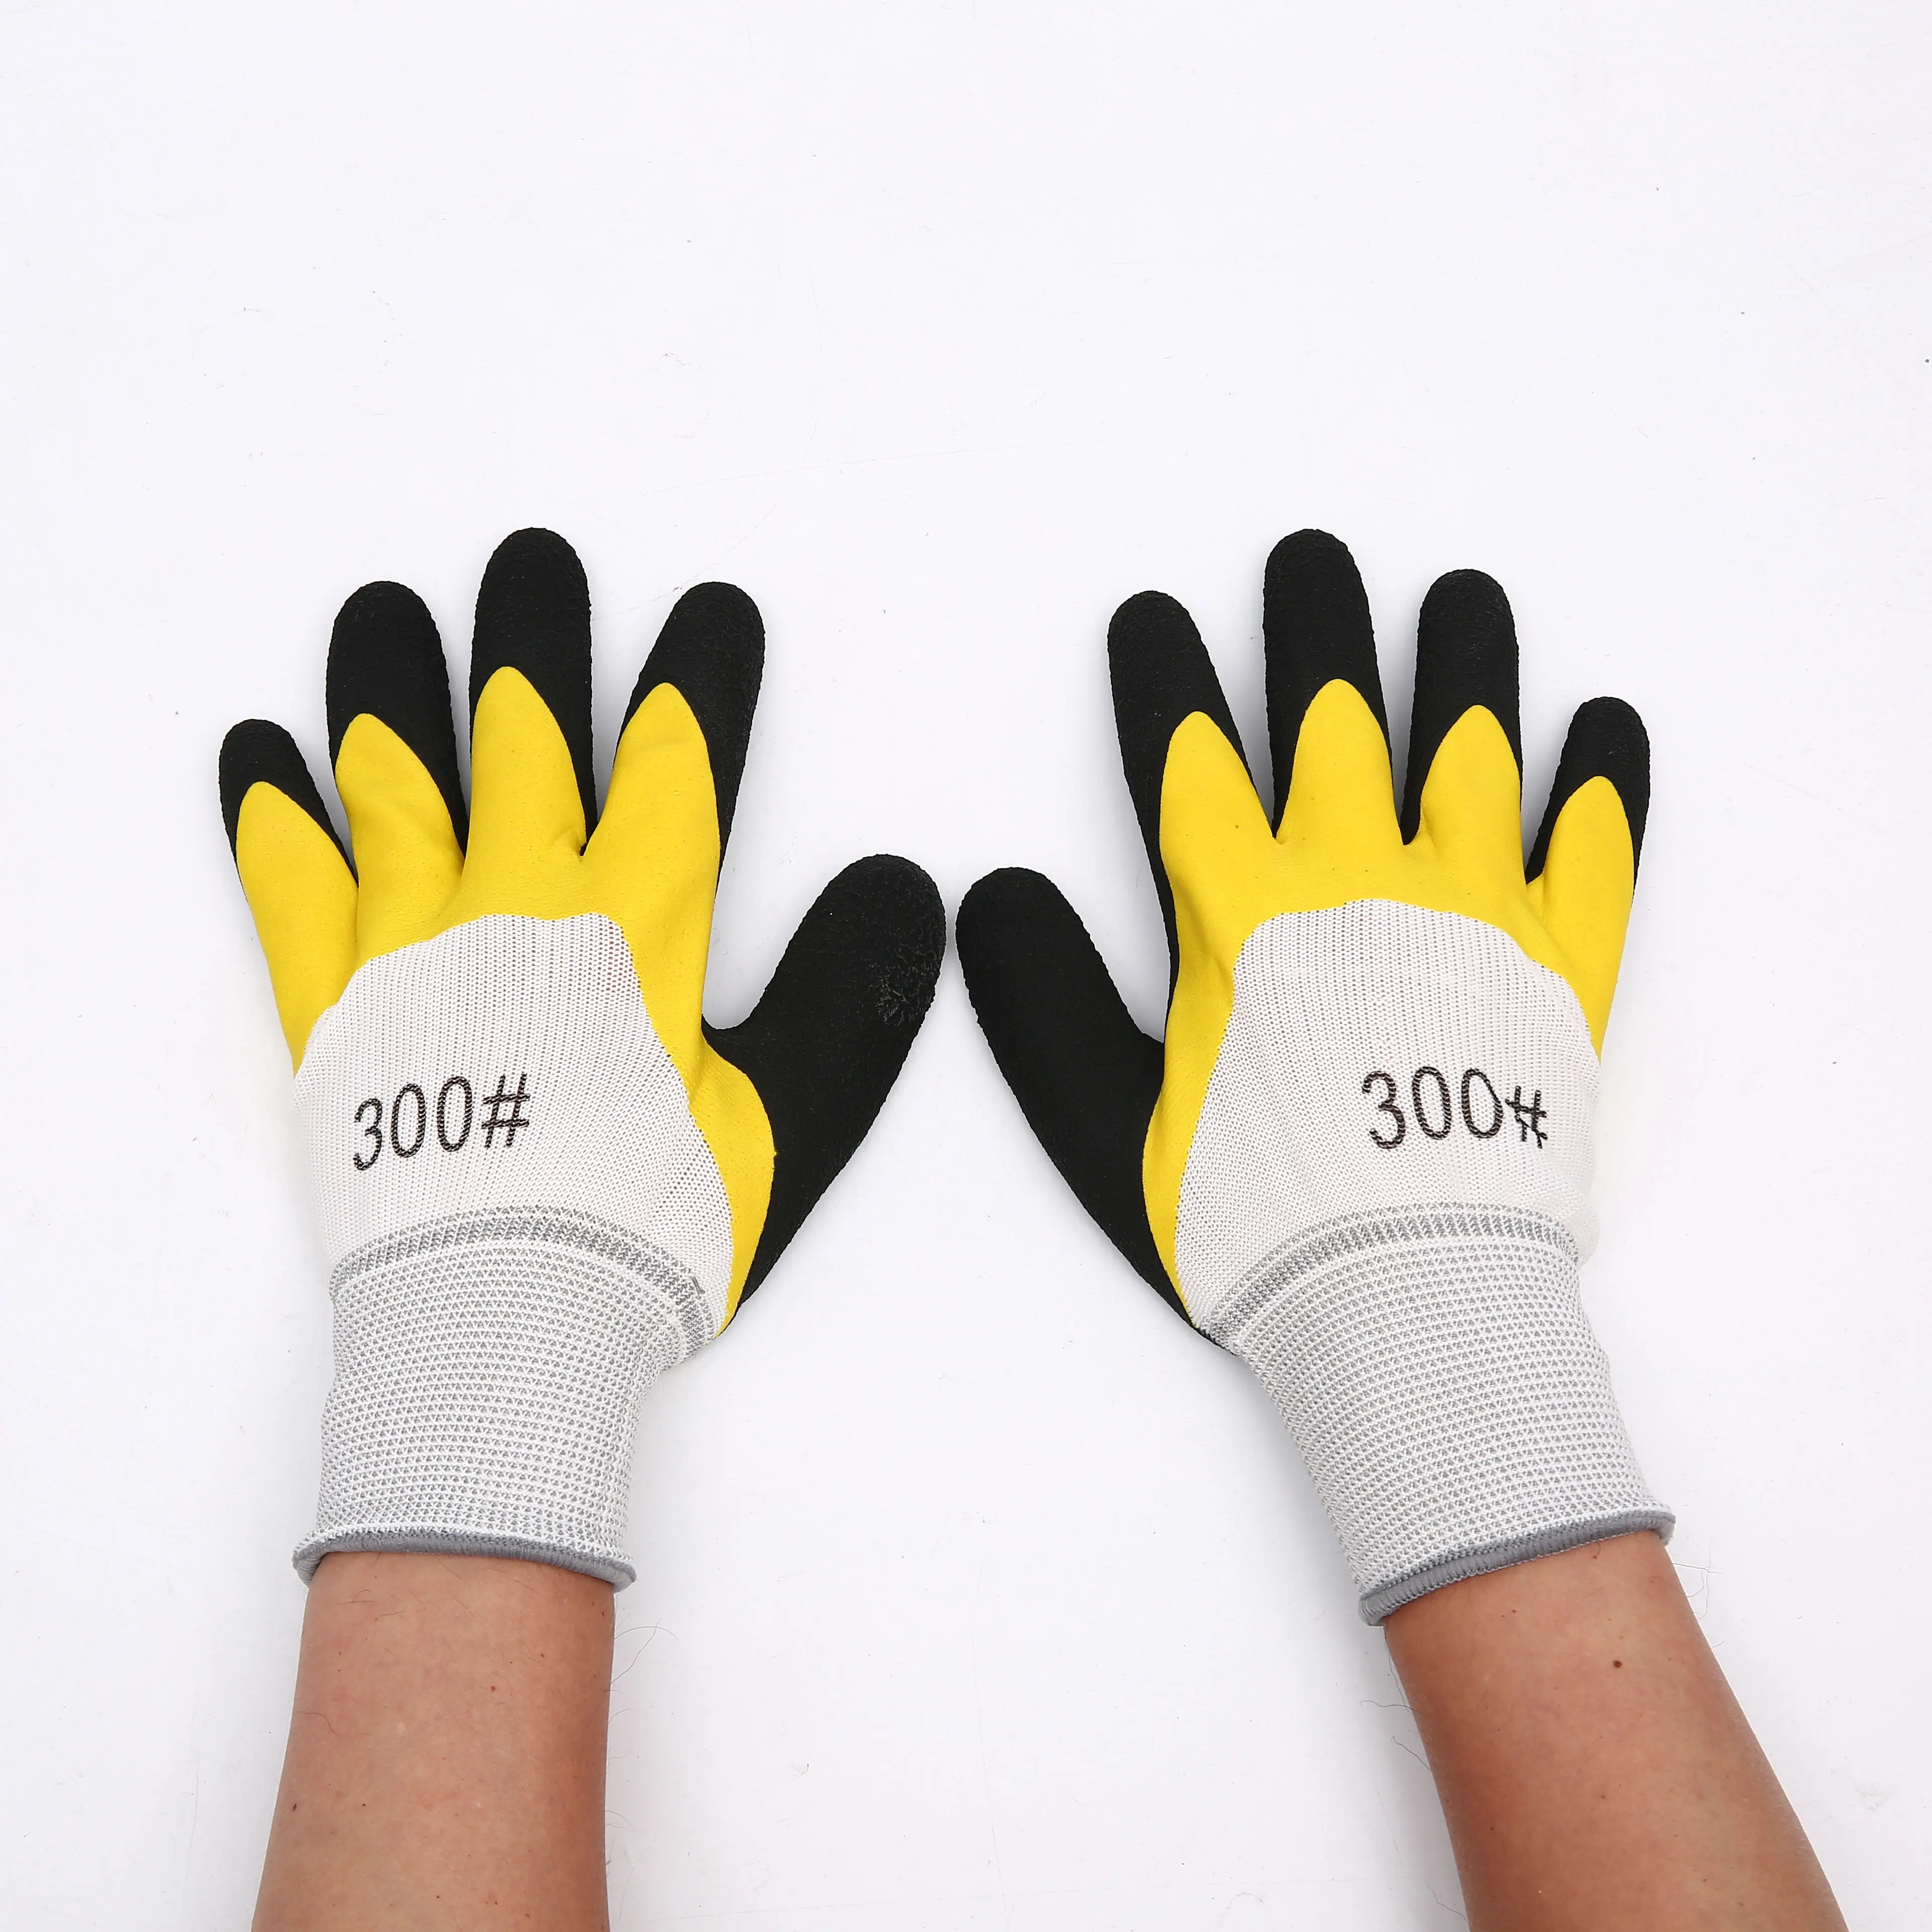 Guanti di sicurezza per guanti da giardino di alta qualità che raccolgono guanti attrezzi da giardino